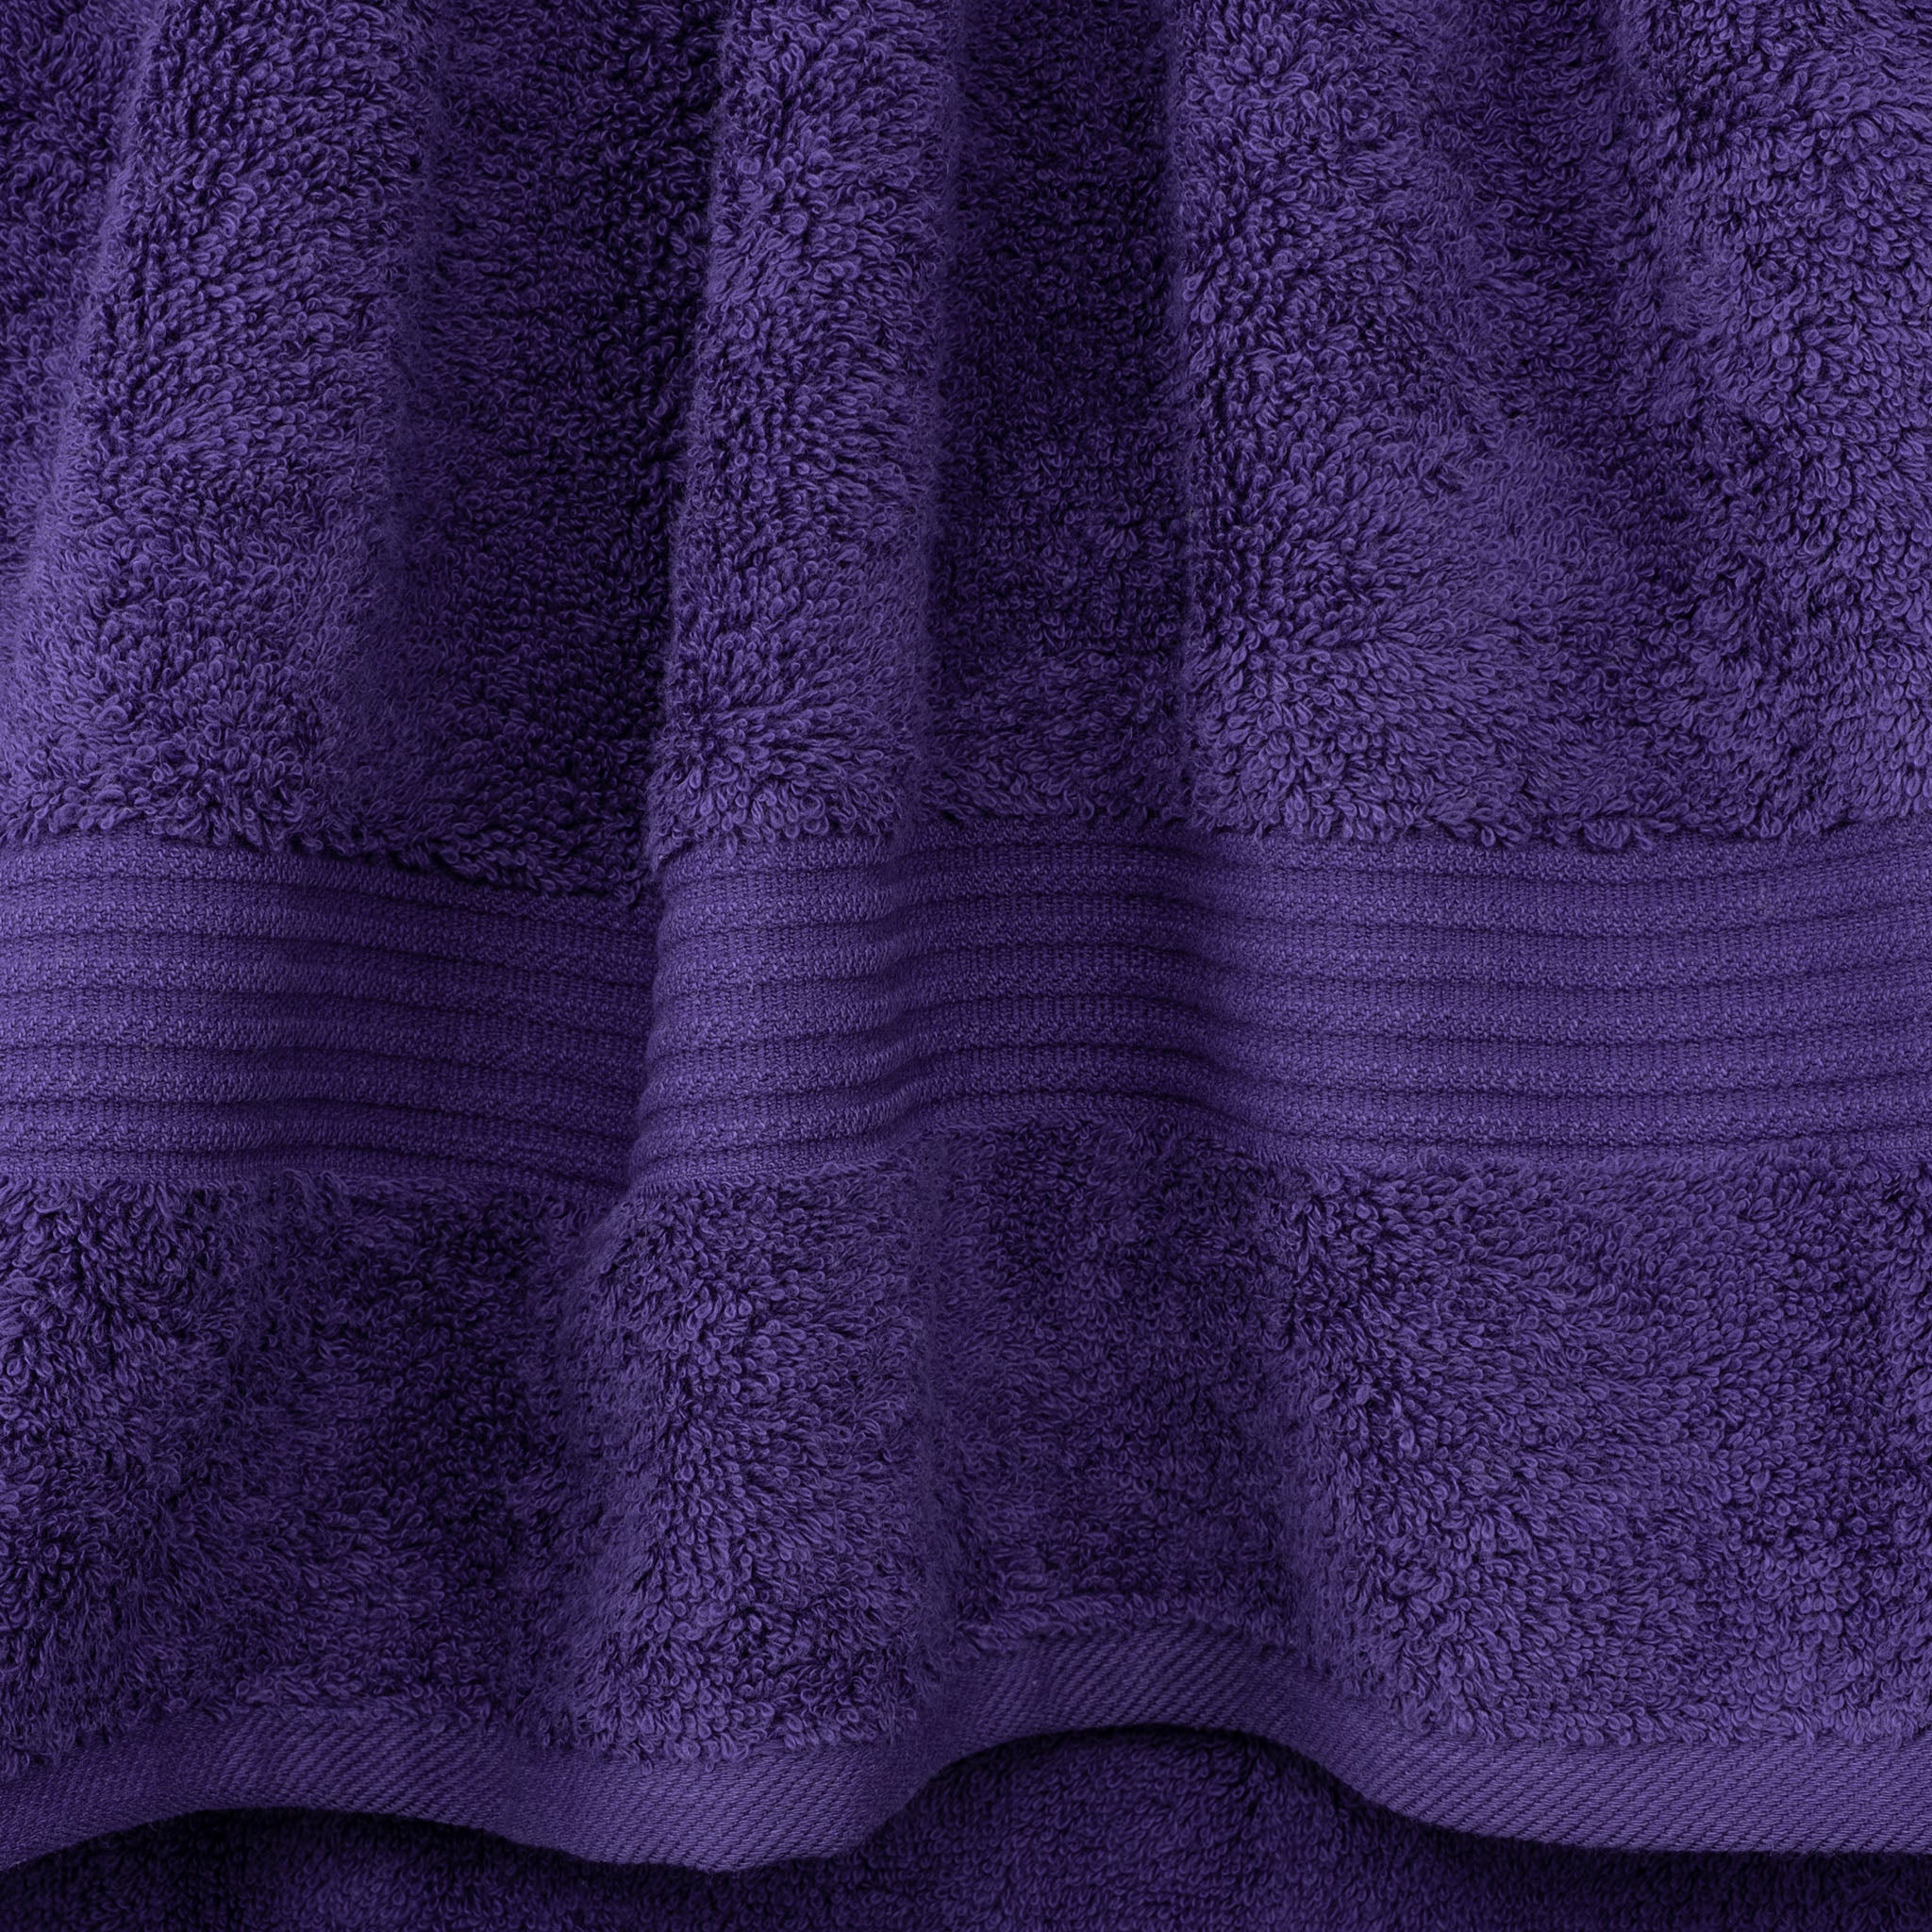 American Soft Linen Bekos 100% Cotton Turkish Towels, 4 Piece Bath Towel Set -purple-03